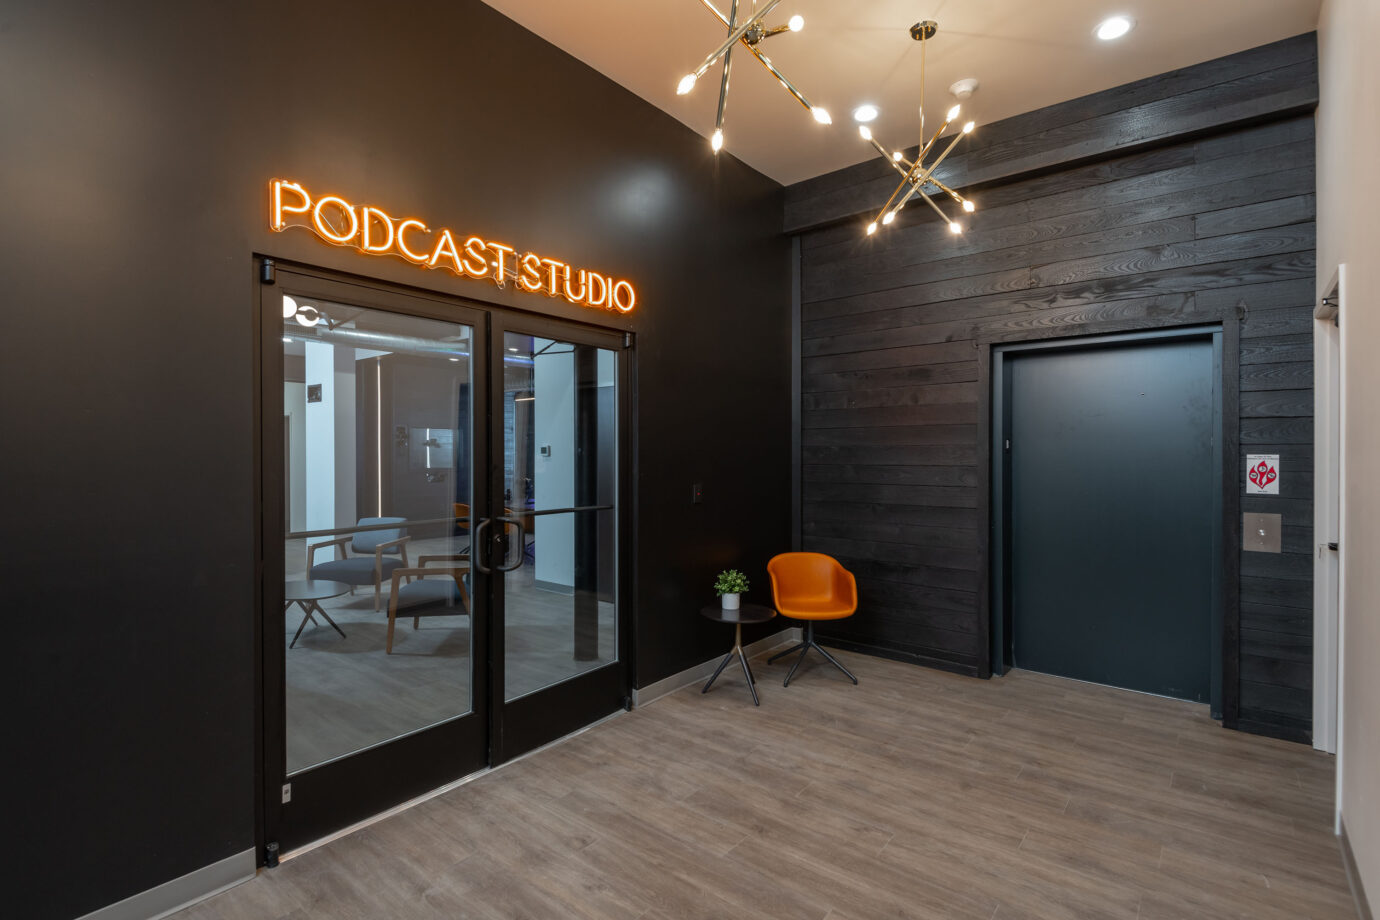 5 N. Main Podcast Studio